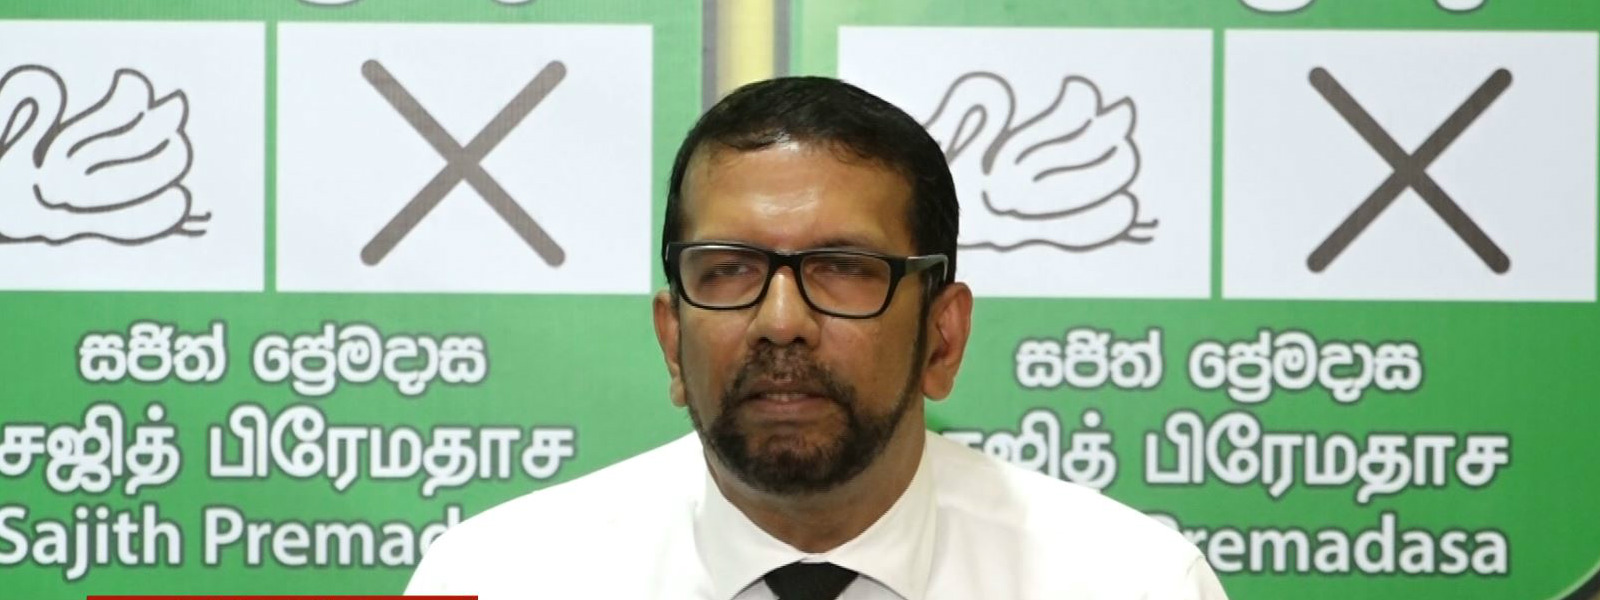 Where are GRs Sri Lankan citizenship docs?- Shiral